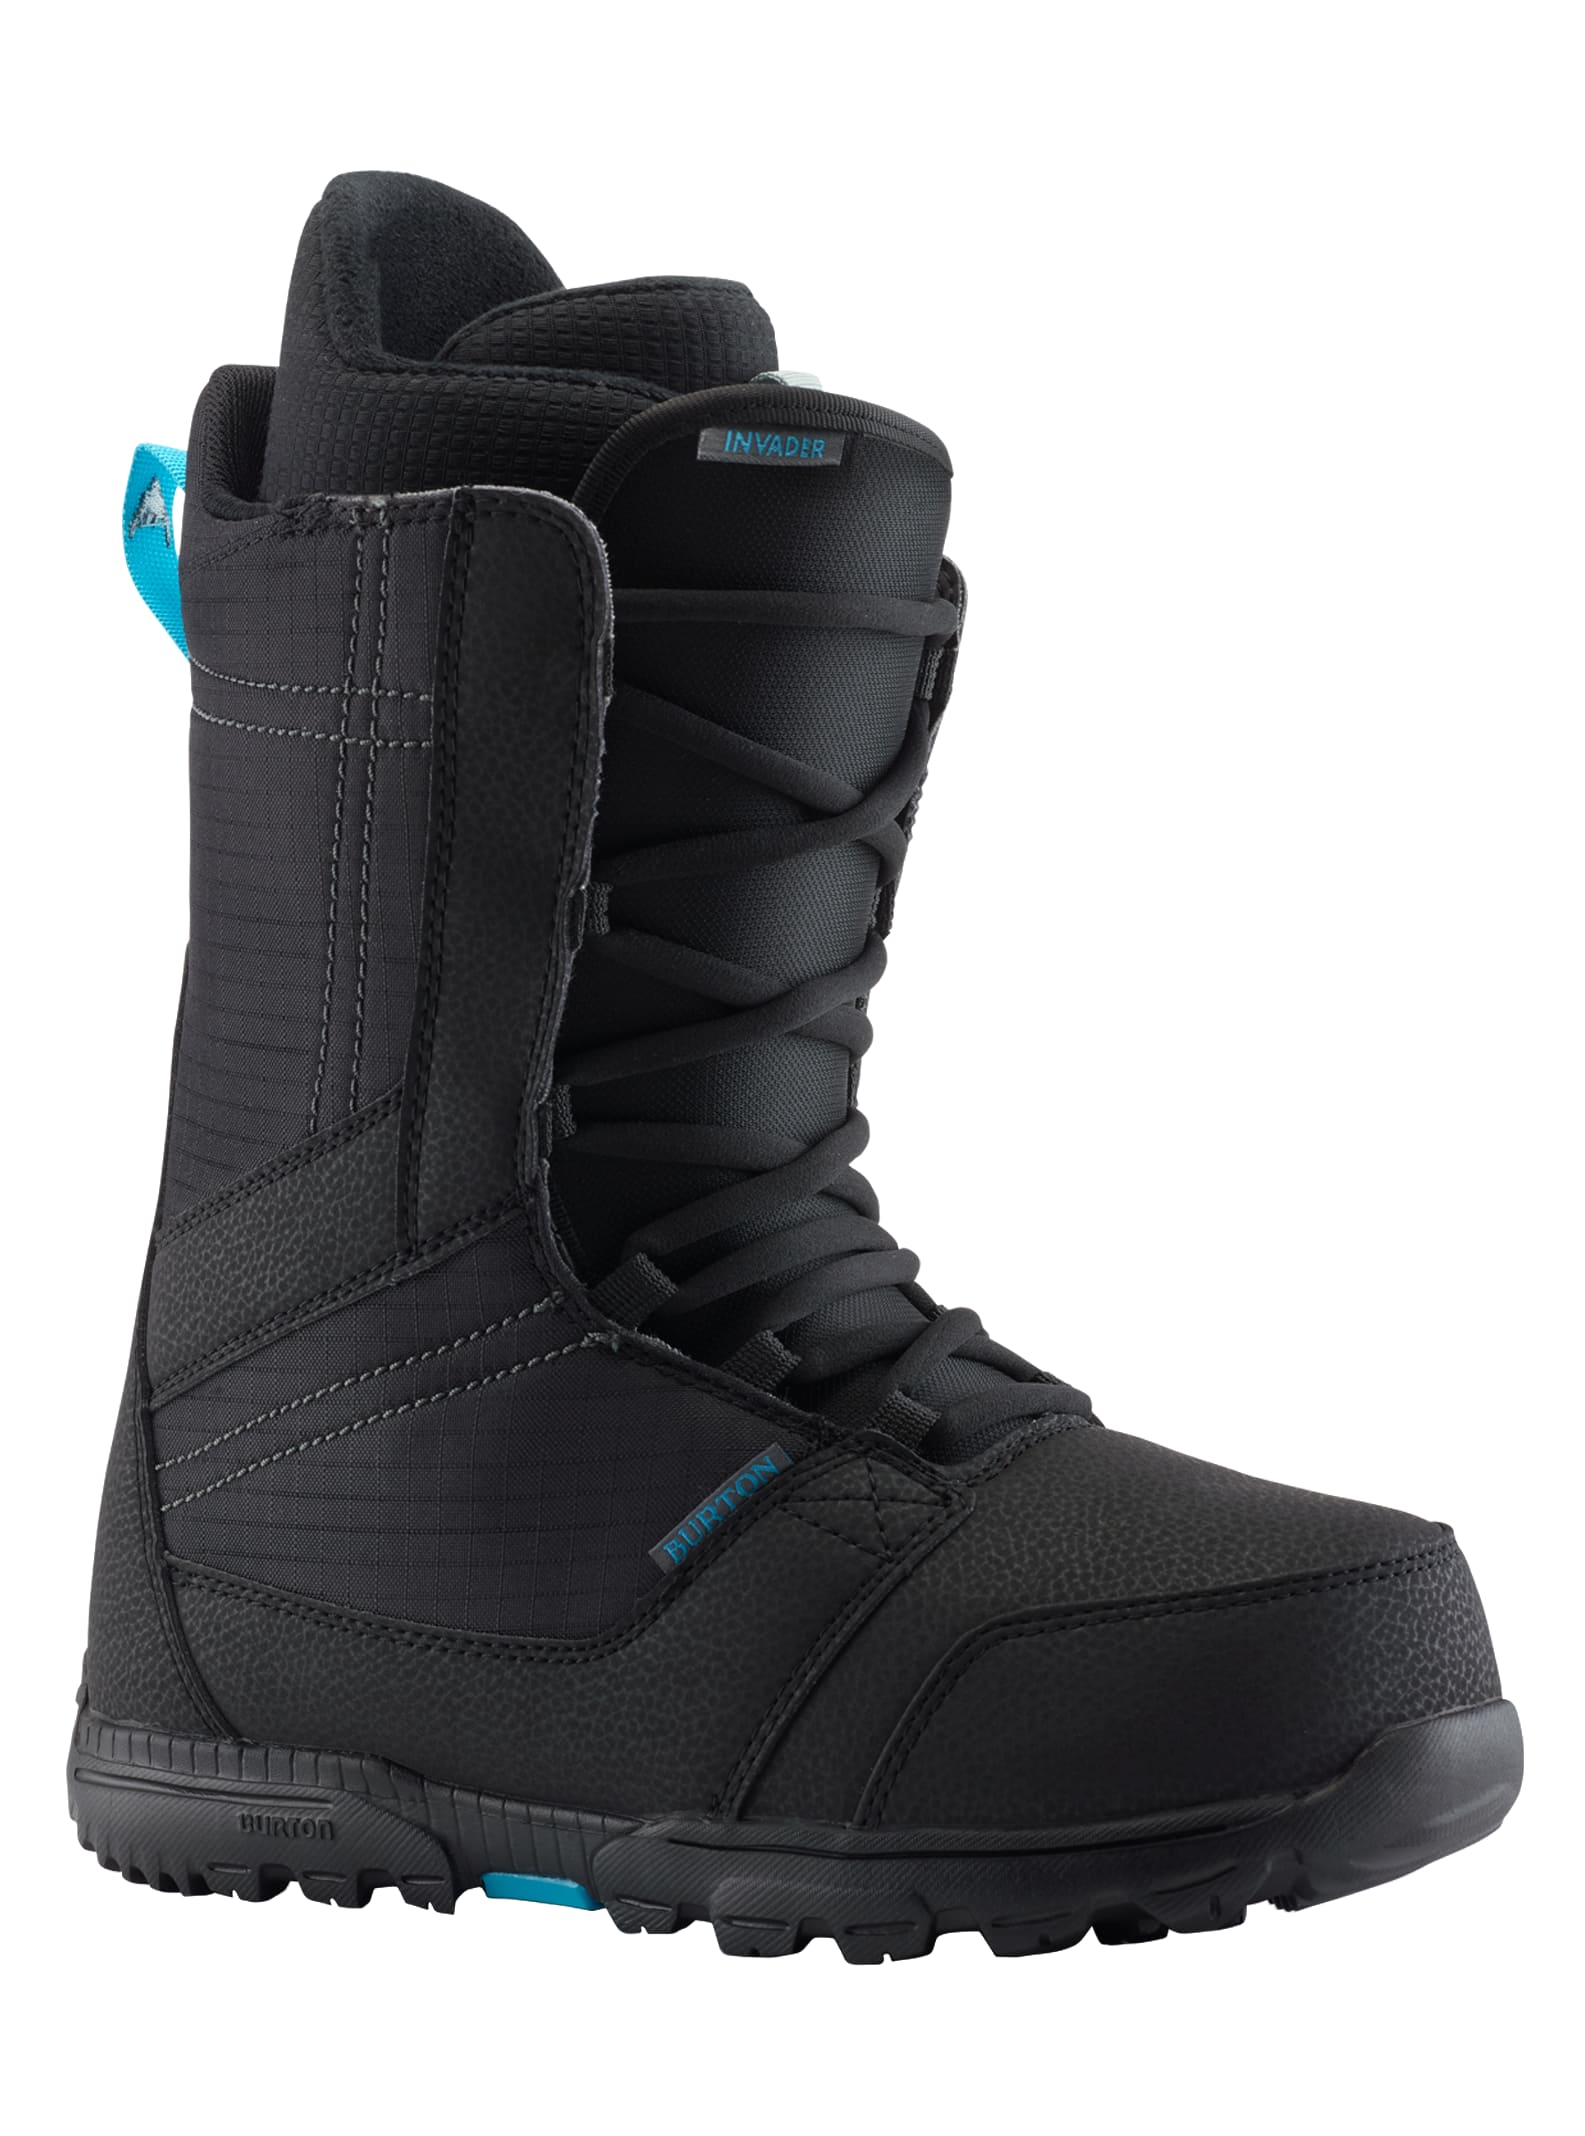 Burton - Boots de snowboard Invader homme, Black, 10